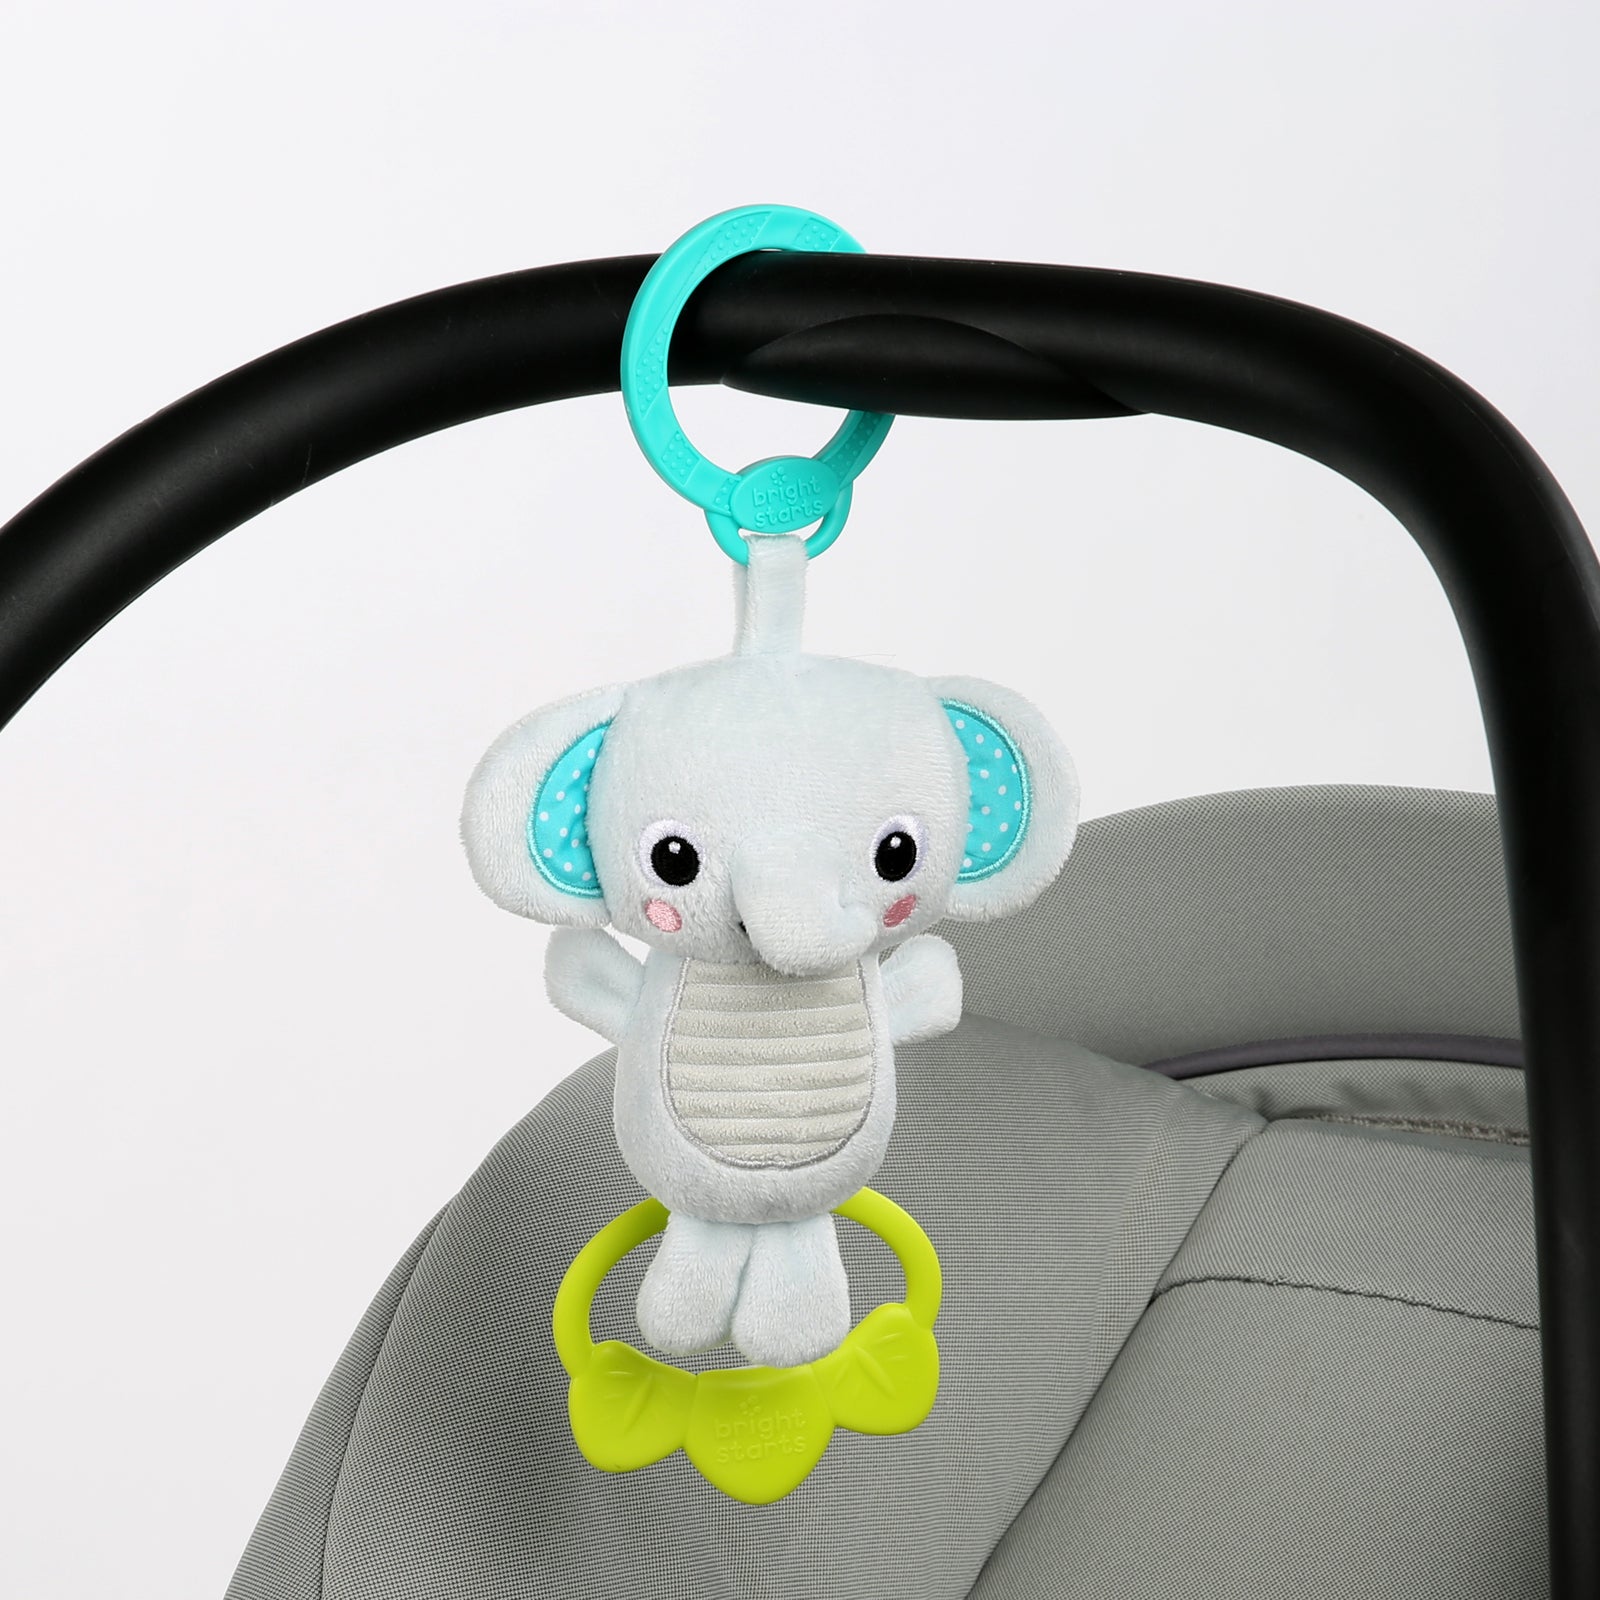 Bright Starts: Tug Tunes On-the-Go Toy - Elephant